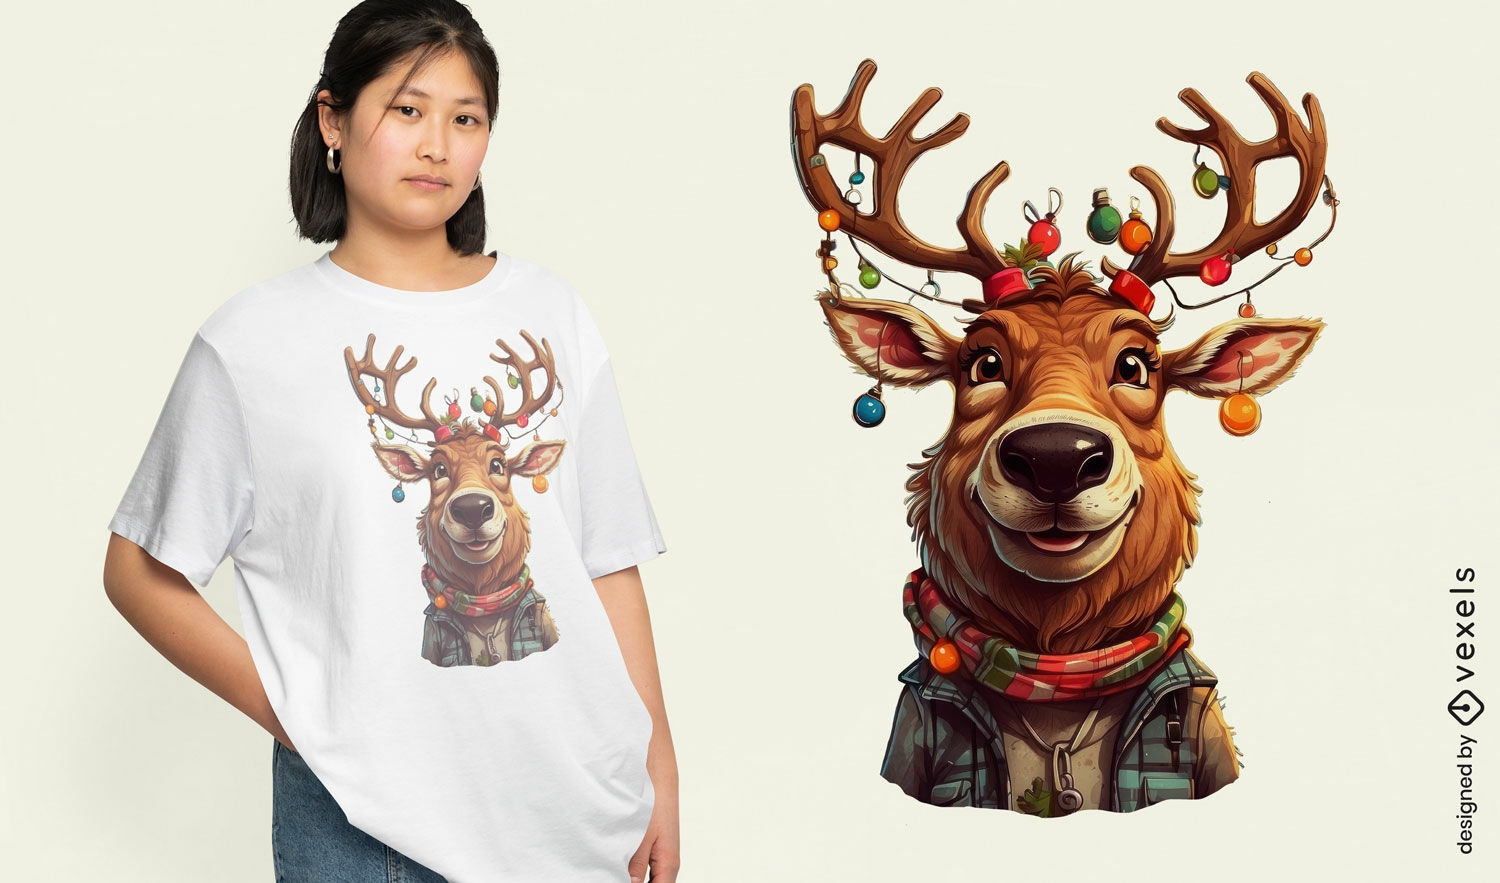 Diseño de camiseta festiva de renos navideños.